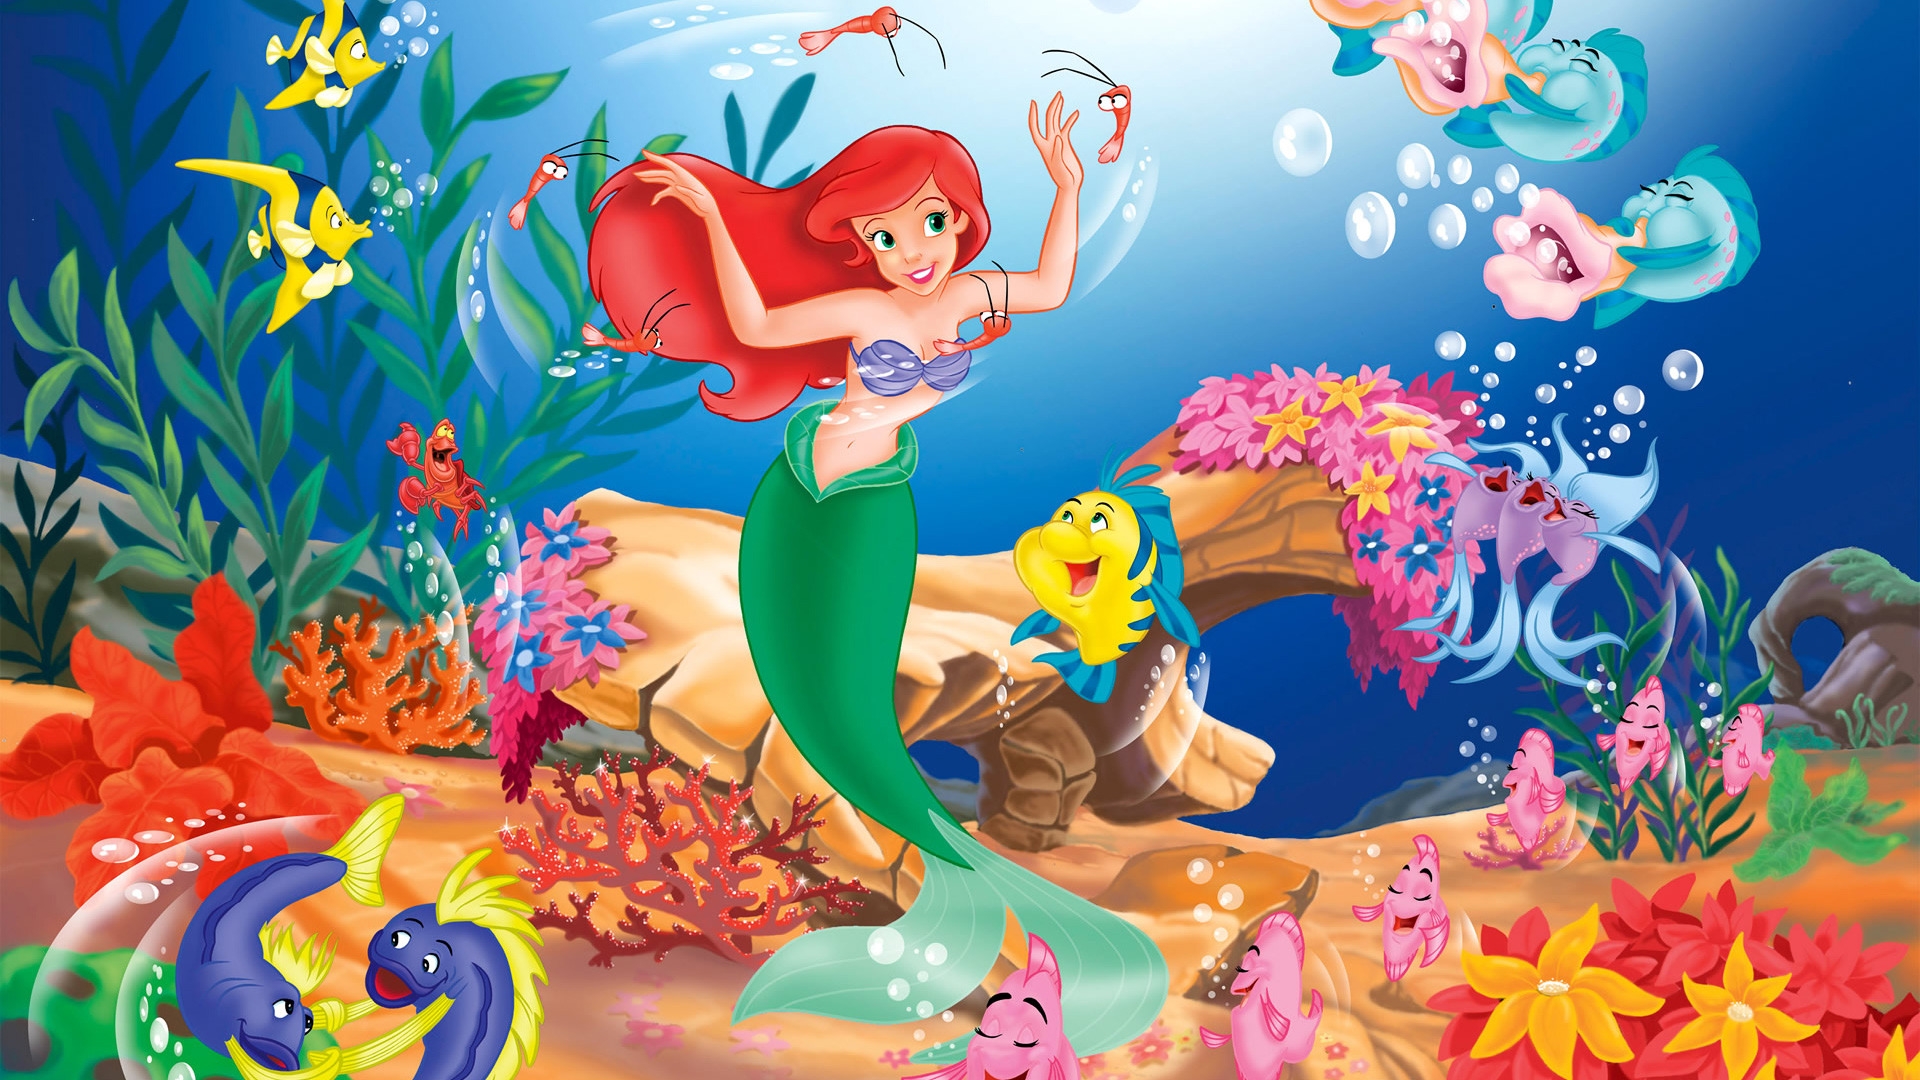 Little Mermaid Cartoon for 1920 x 1080 HDTV 1080p resolution